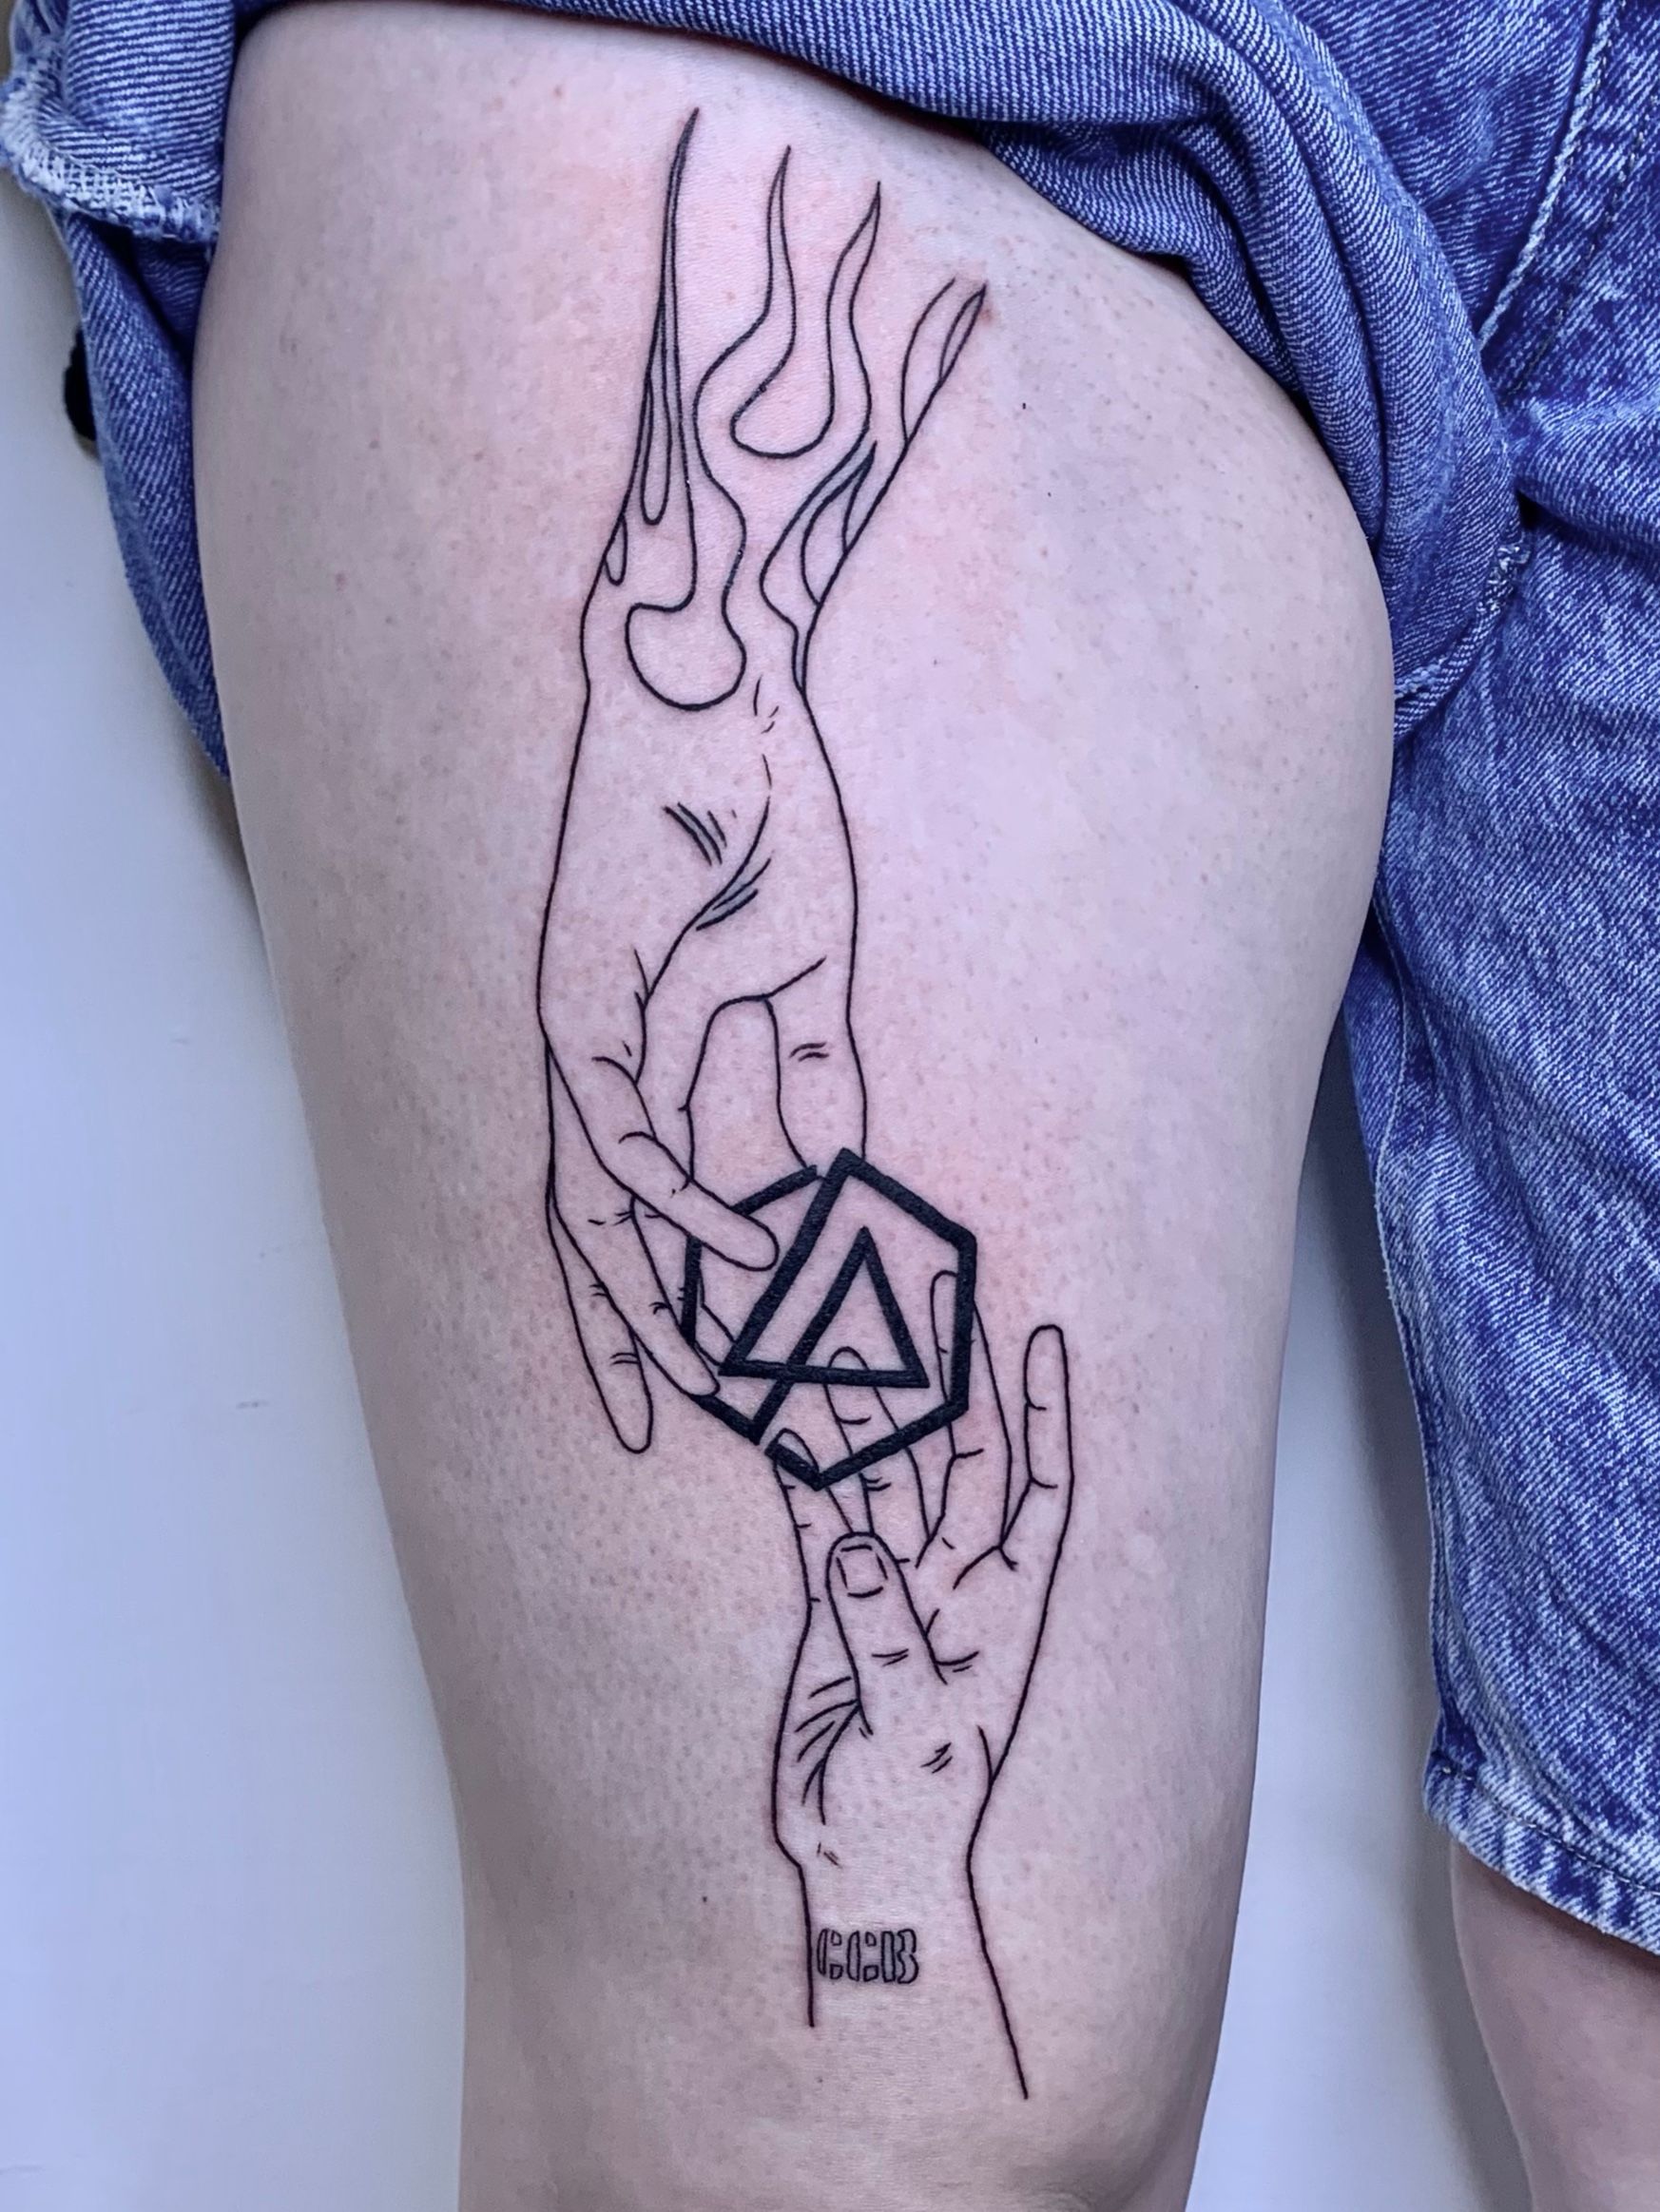 Tattoo uploaded by Teake jonkman • Linkin Park logo tattoo • Tattoodo